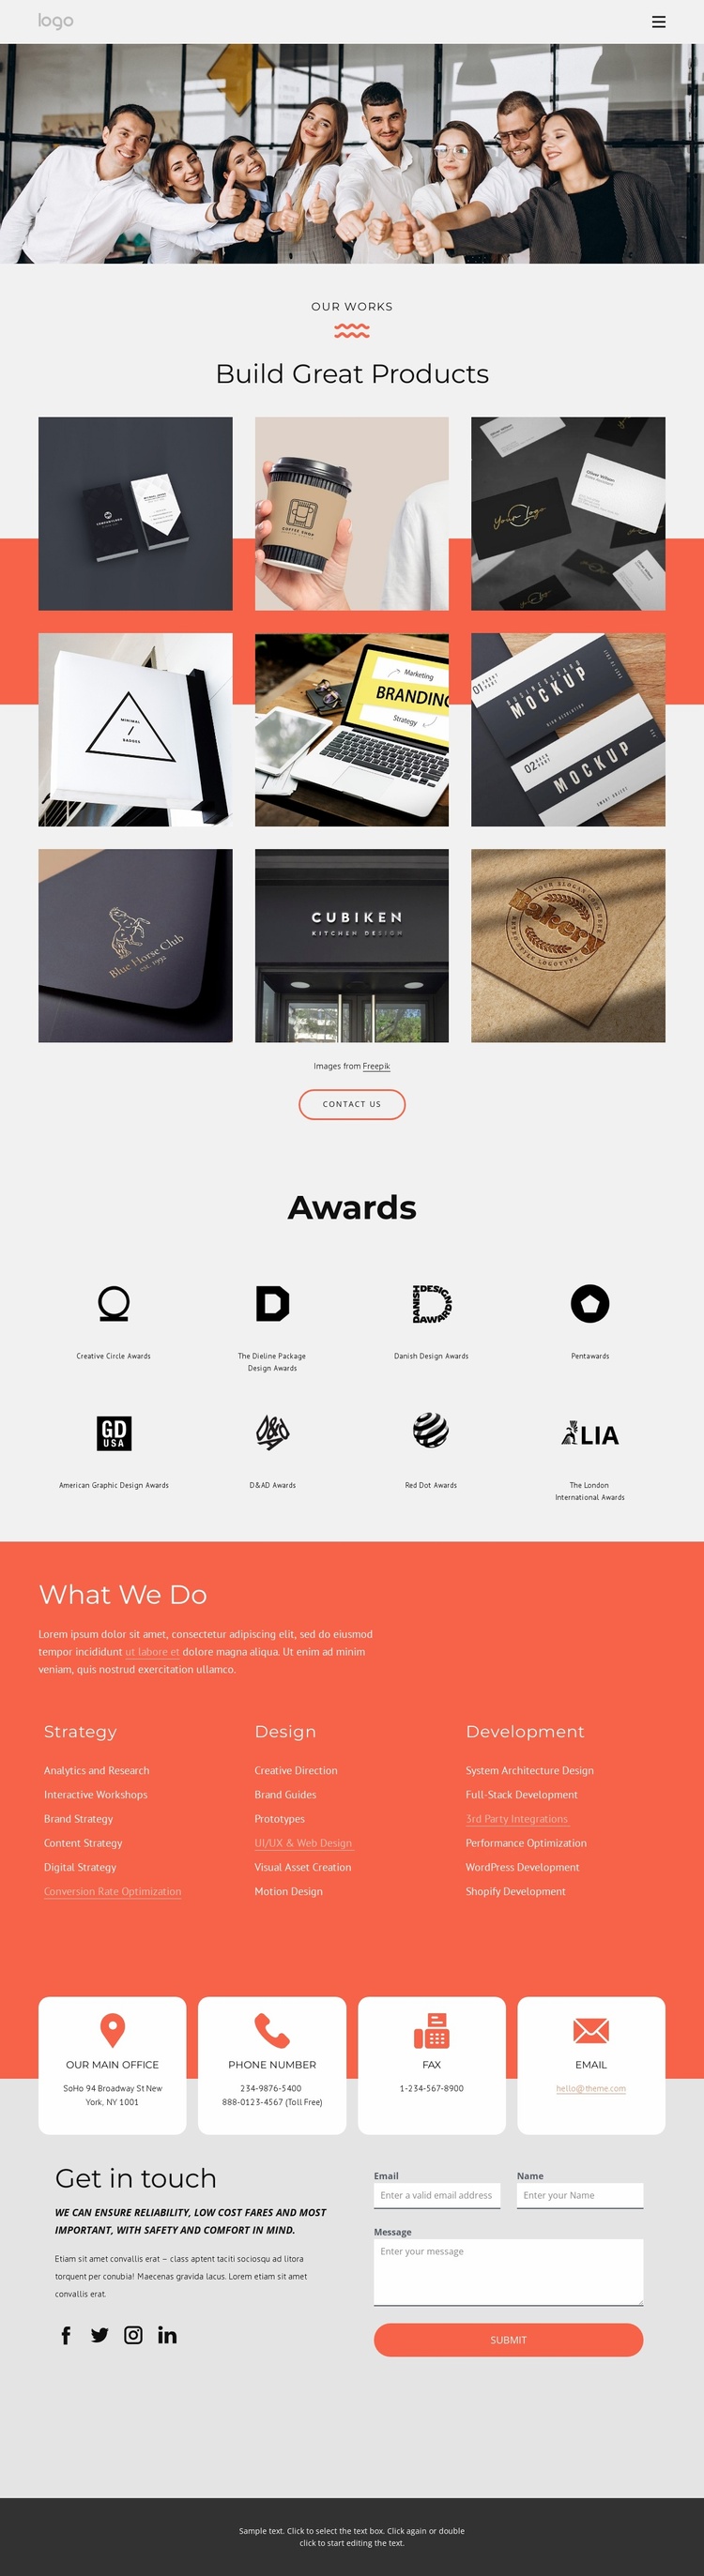 Award winning branding services eCommerce Website Design